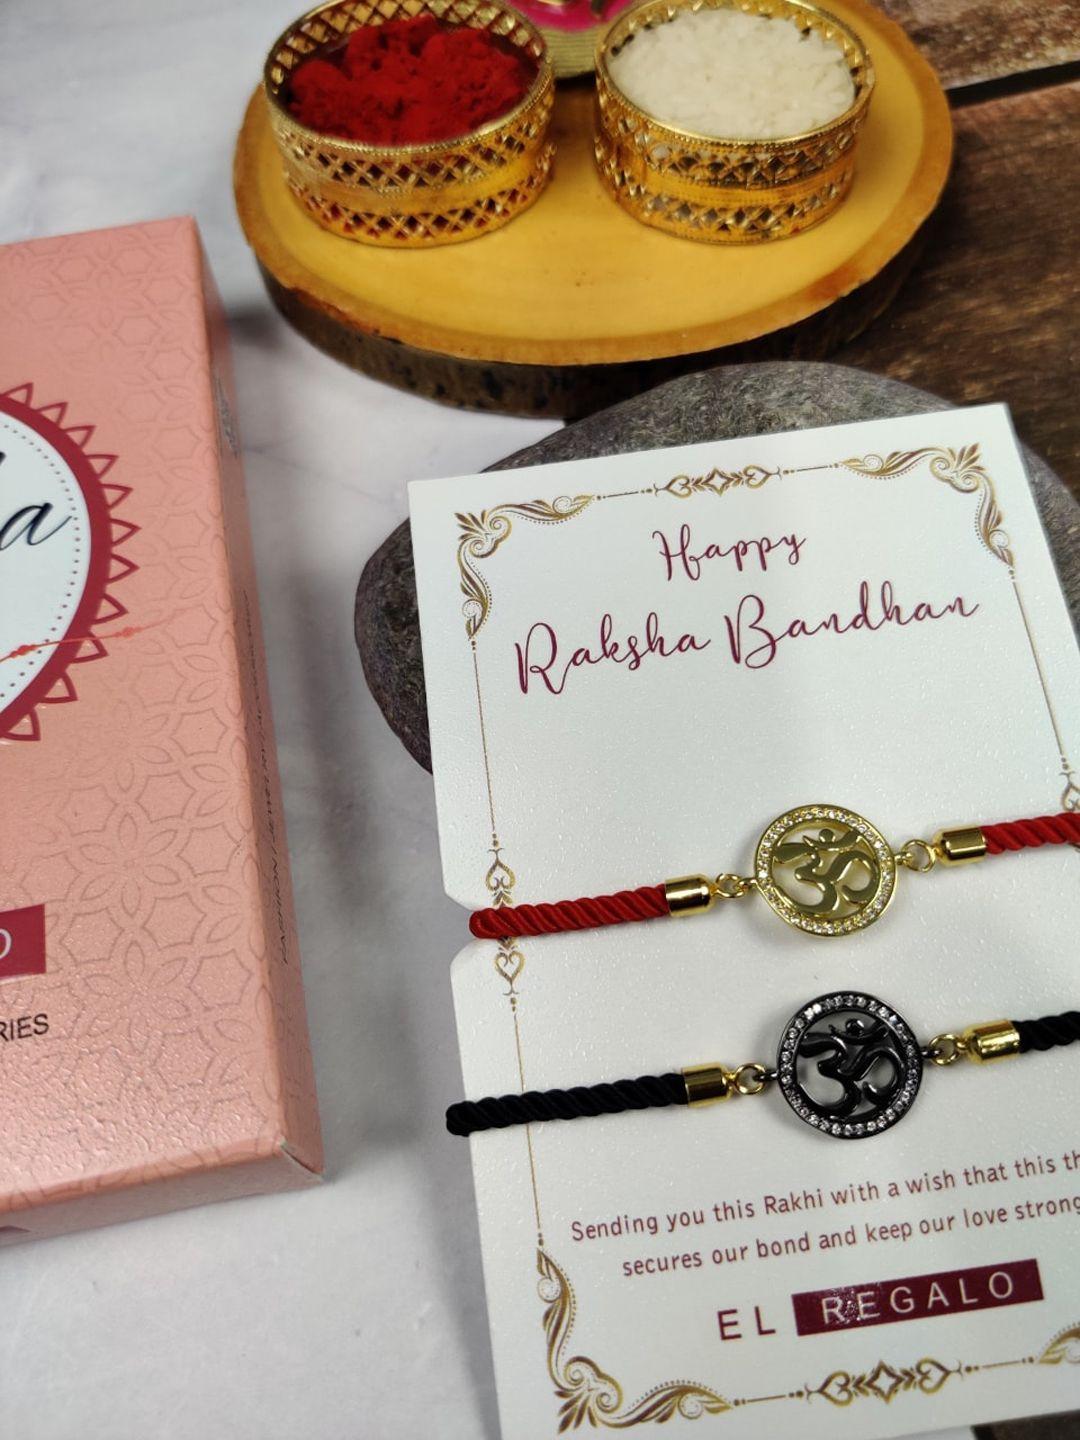 el regalo set of 2 stone-studded charm rakhi